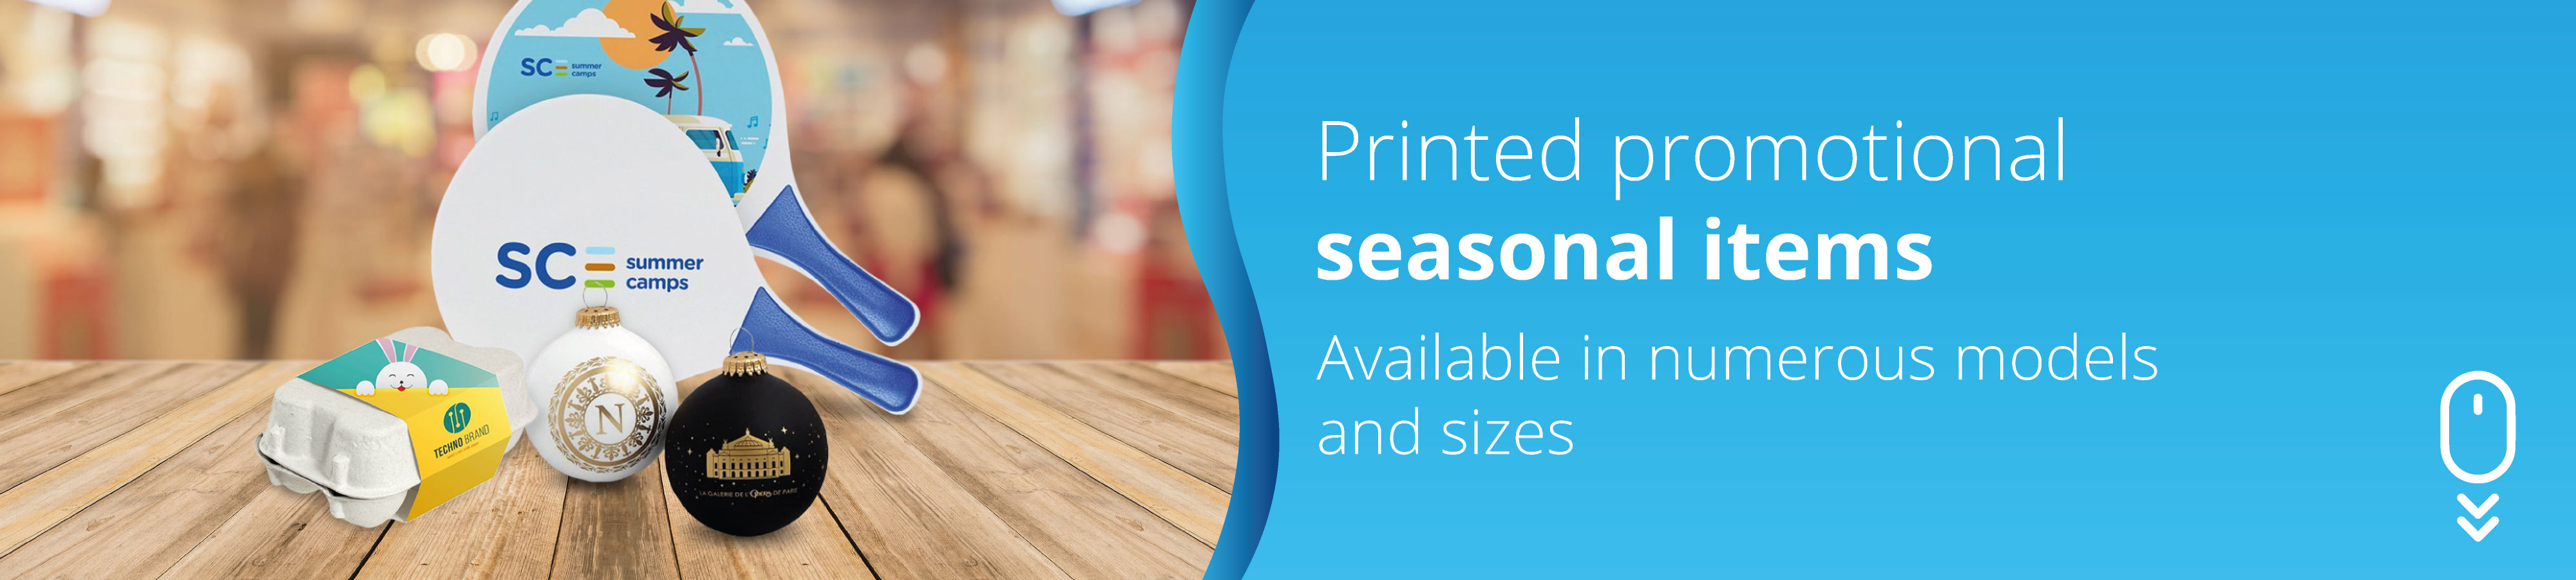 printed-promotional-seasonal-items